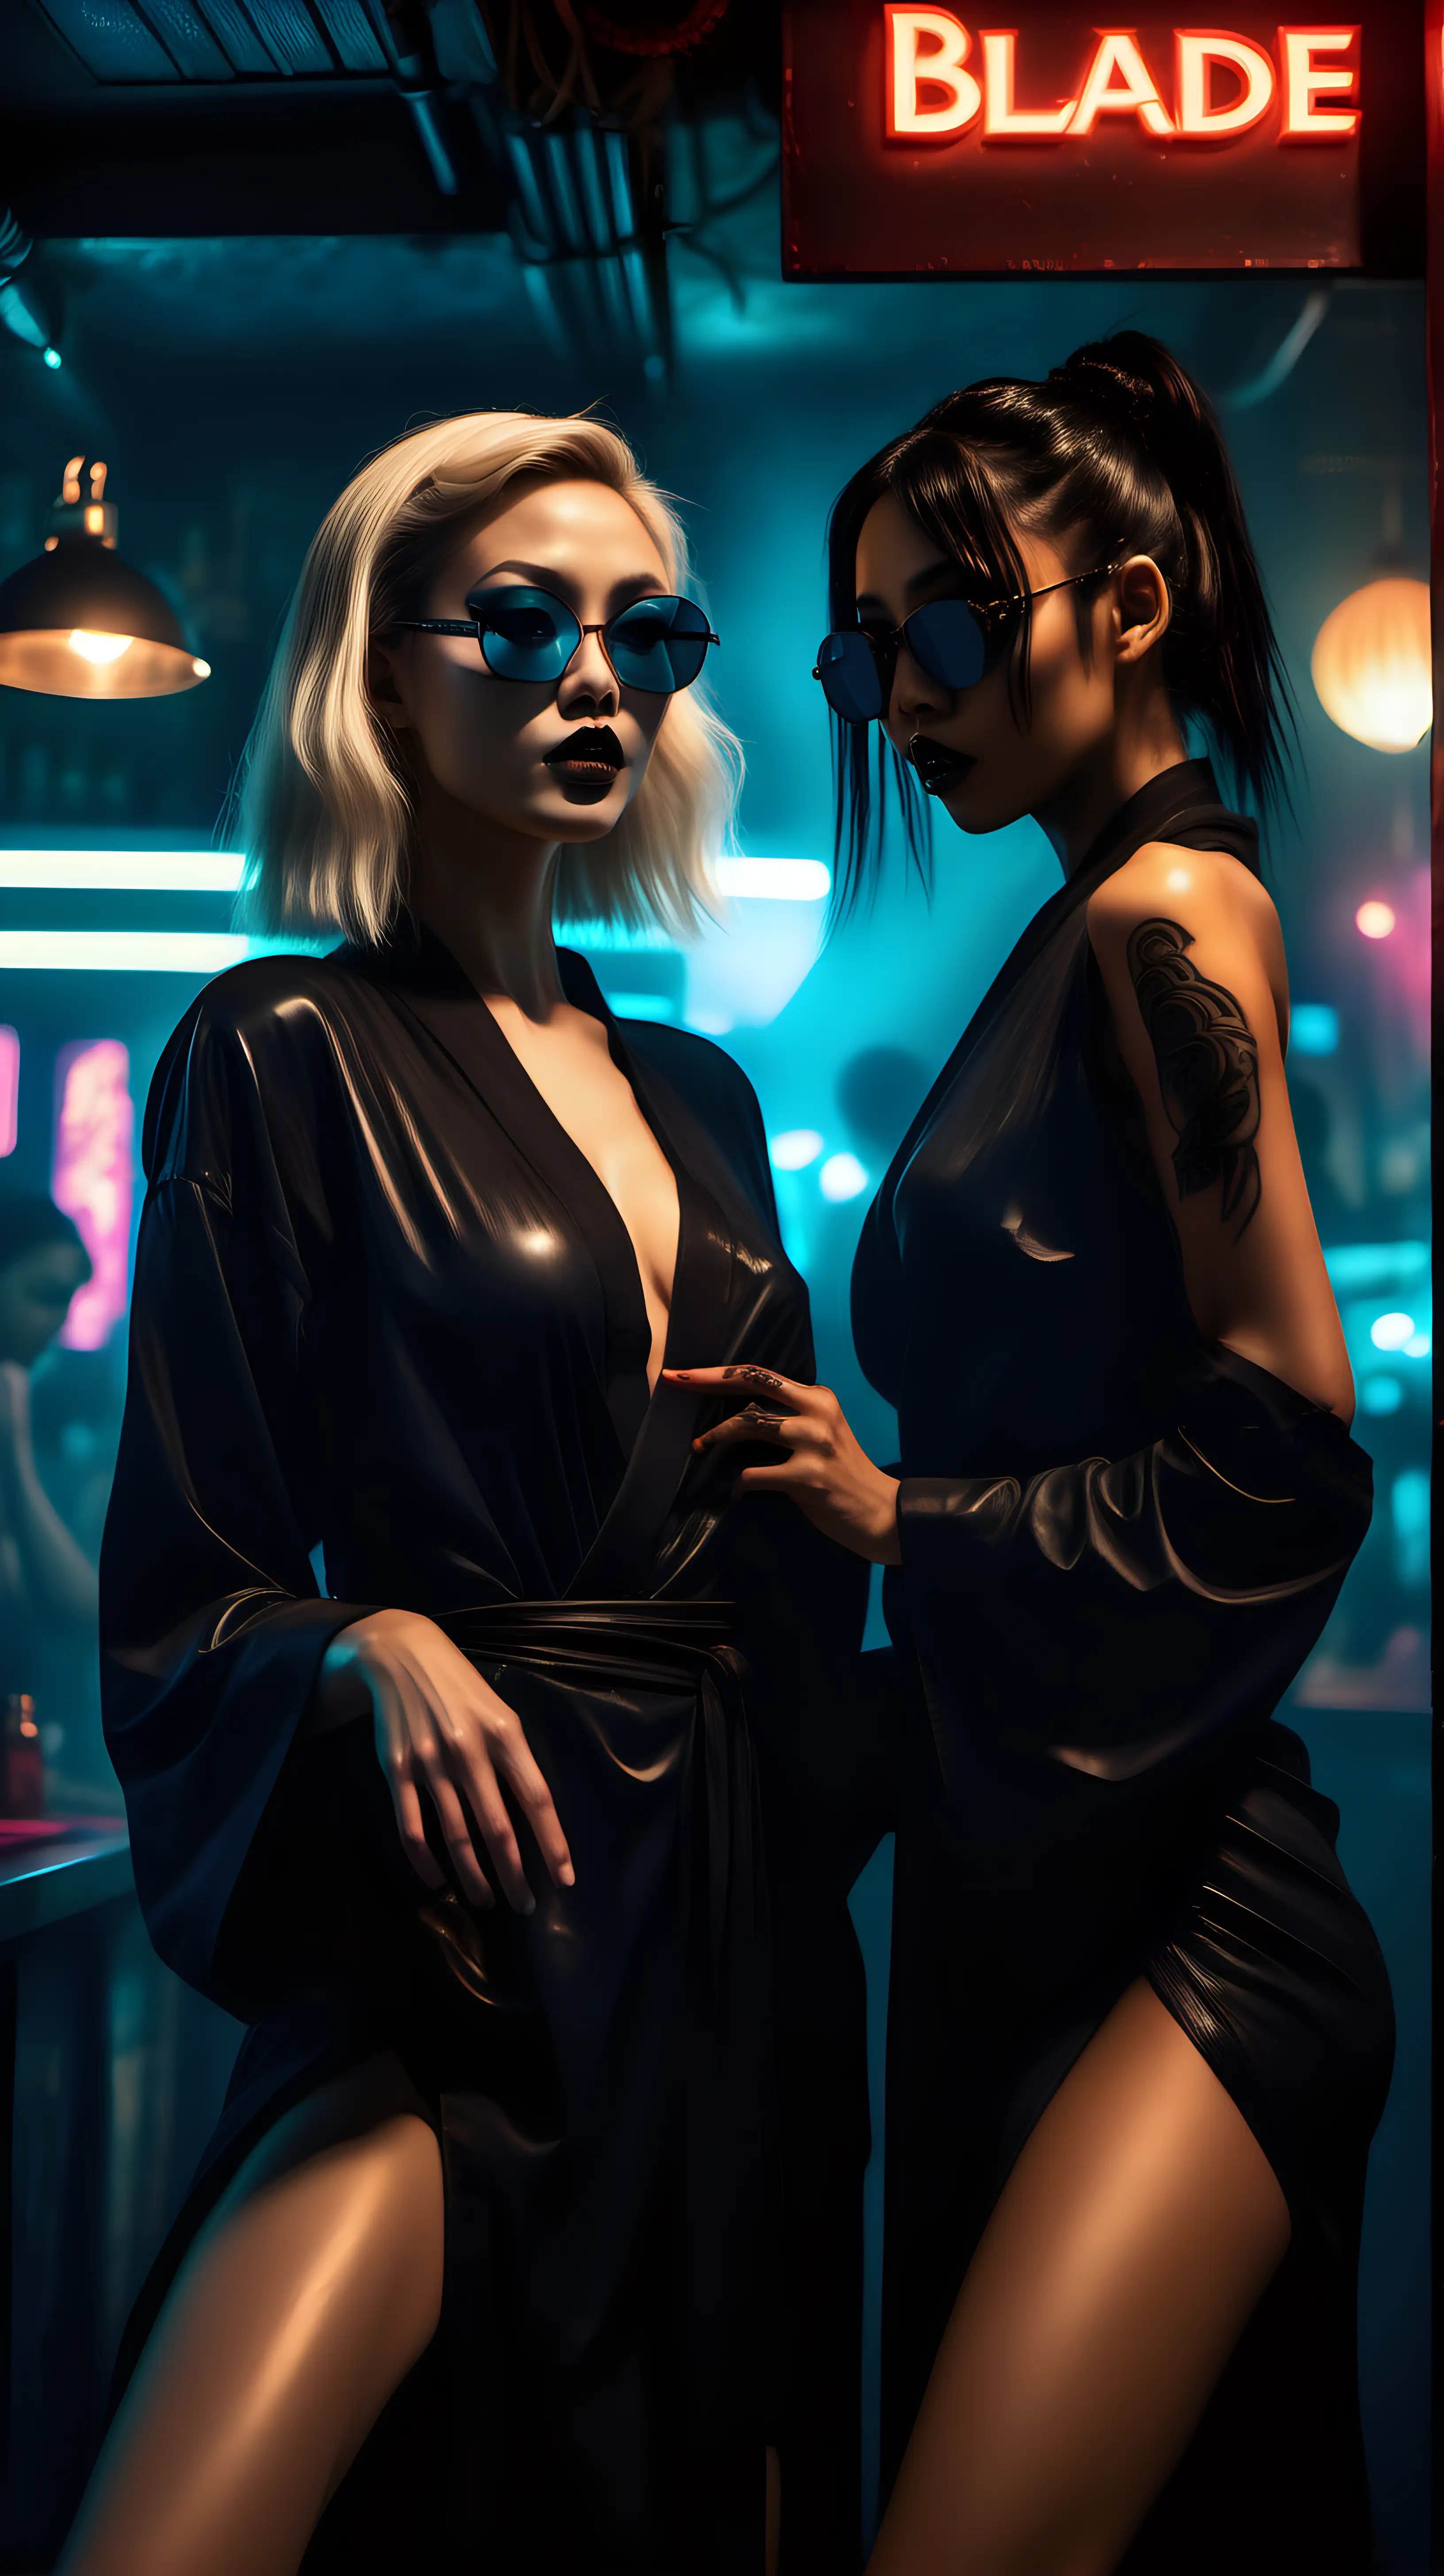 Seductive Dance Hyperrealistic Women in Black Sunglasses Share Intimate Kiss in Blade Runner Asian Bar